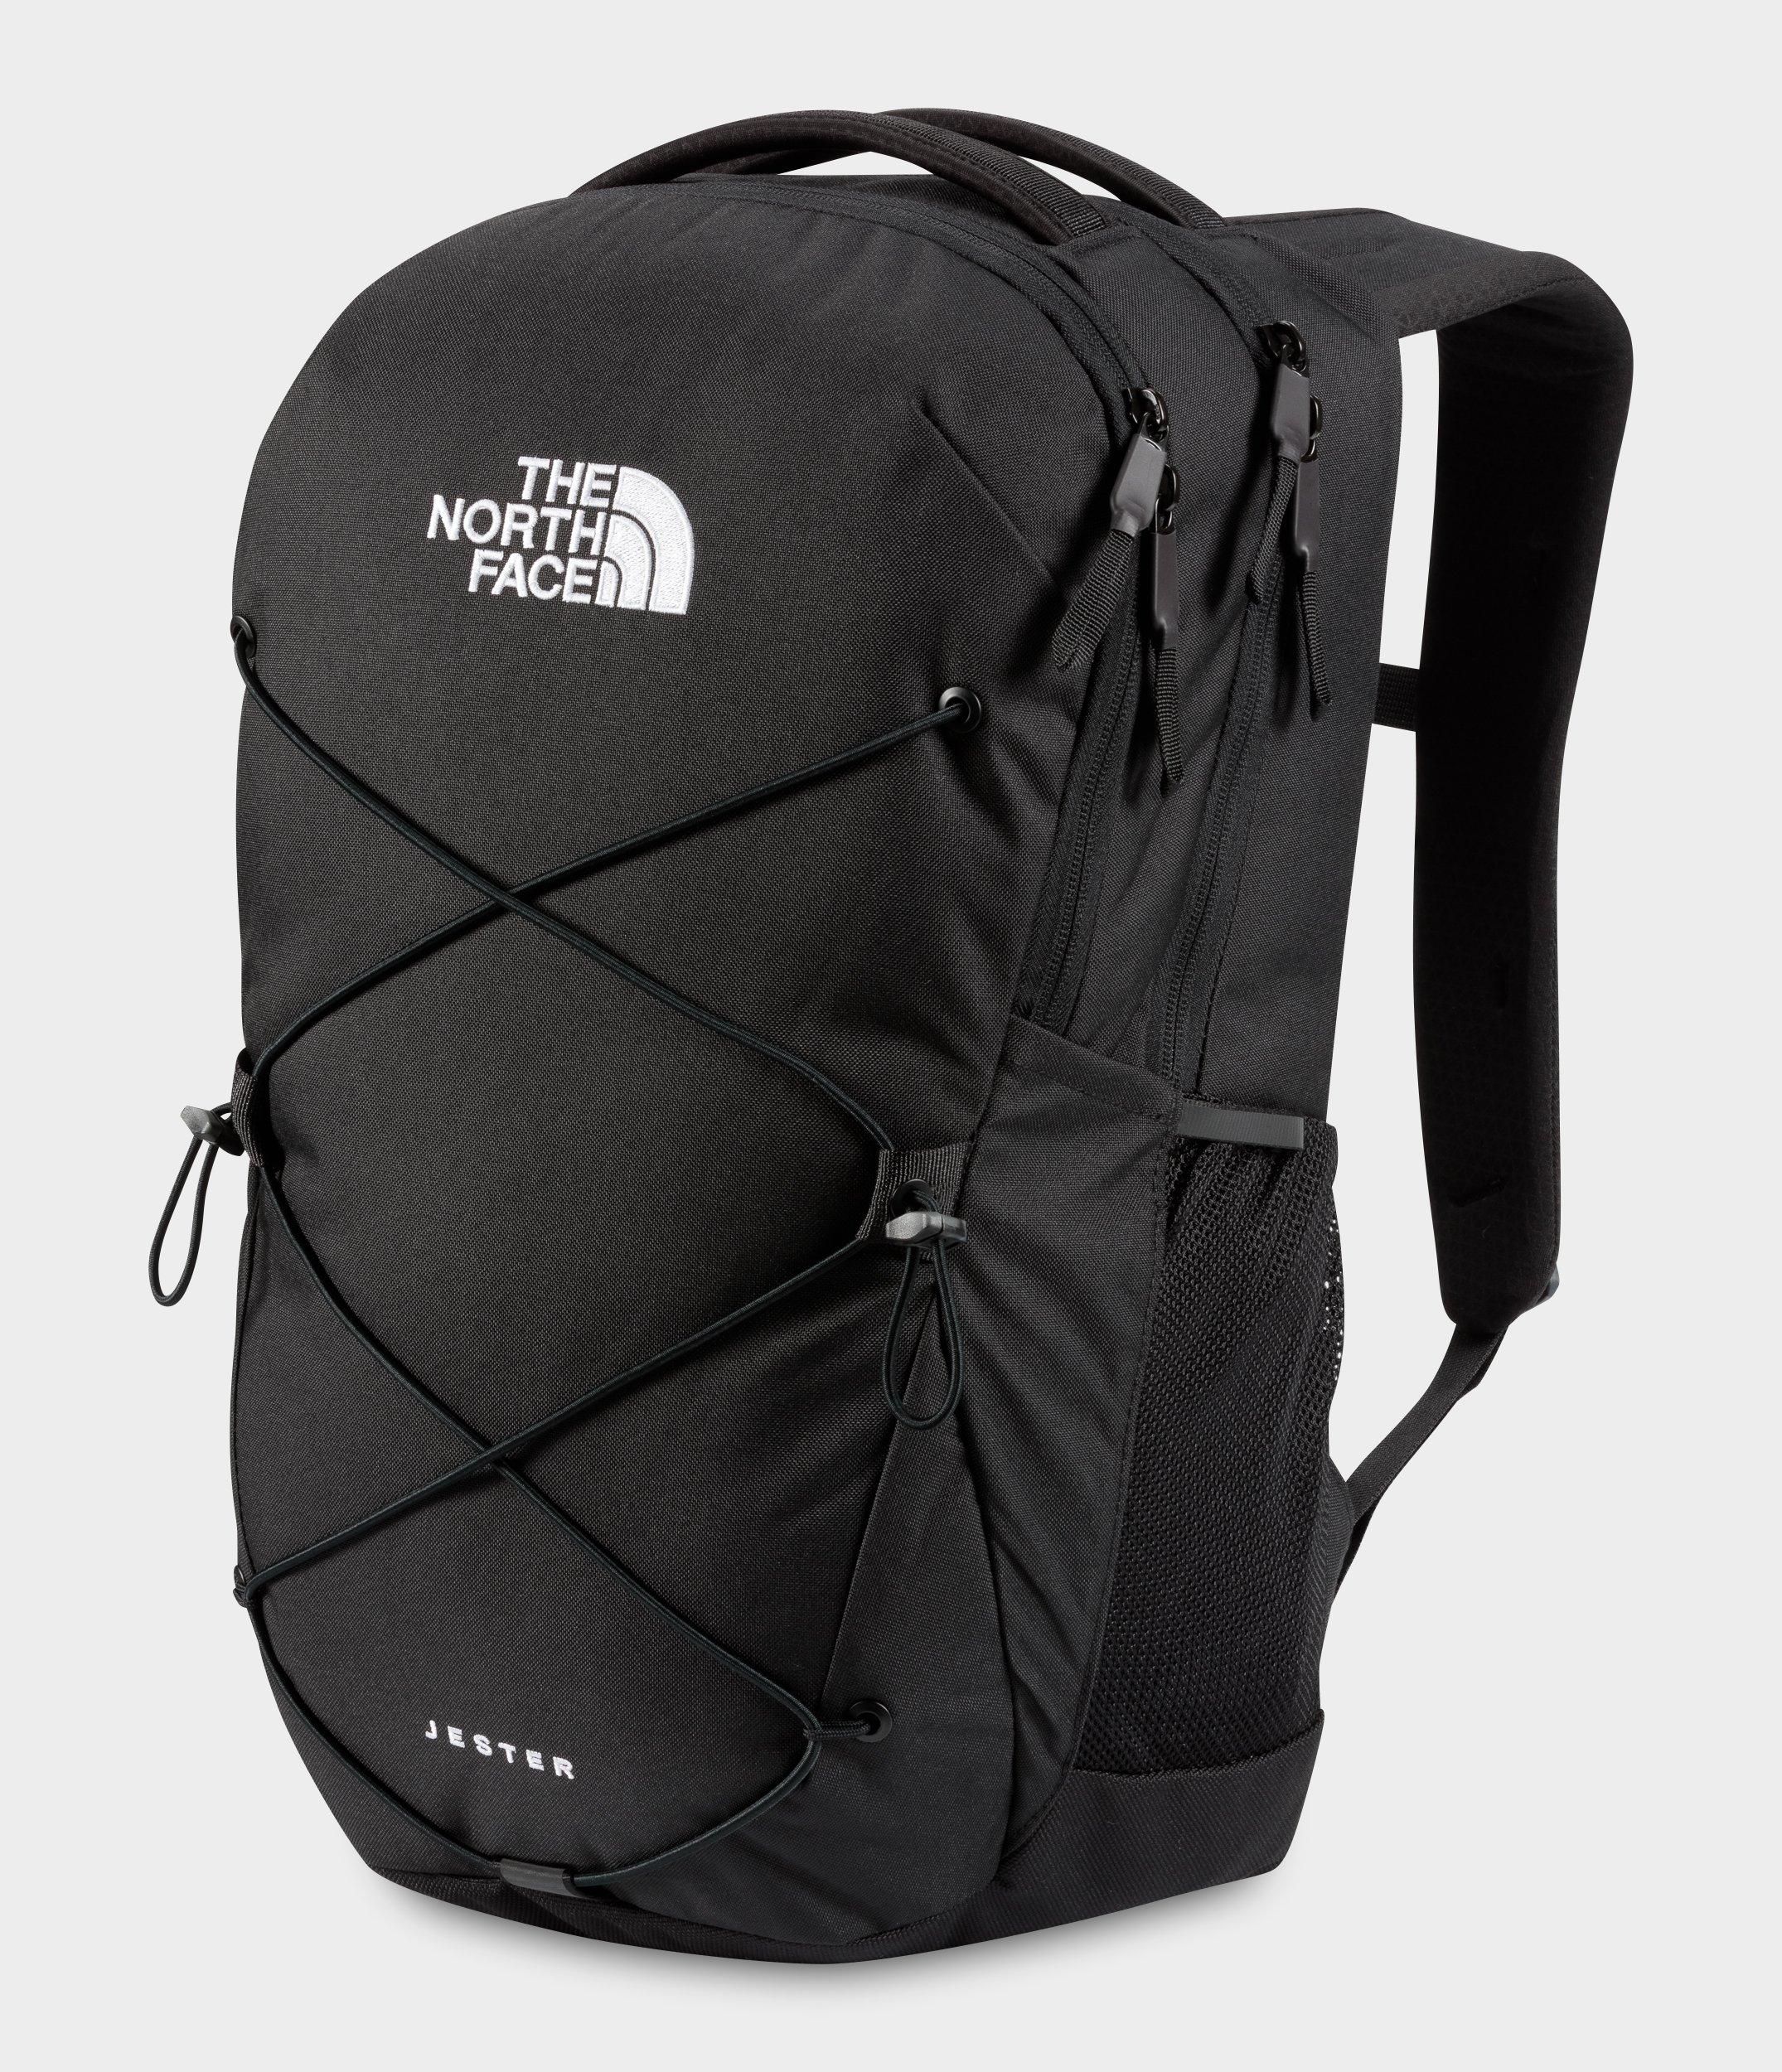 hibbett sports north face backpacks